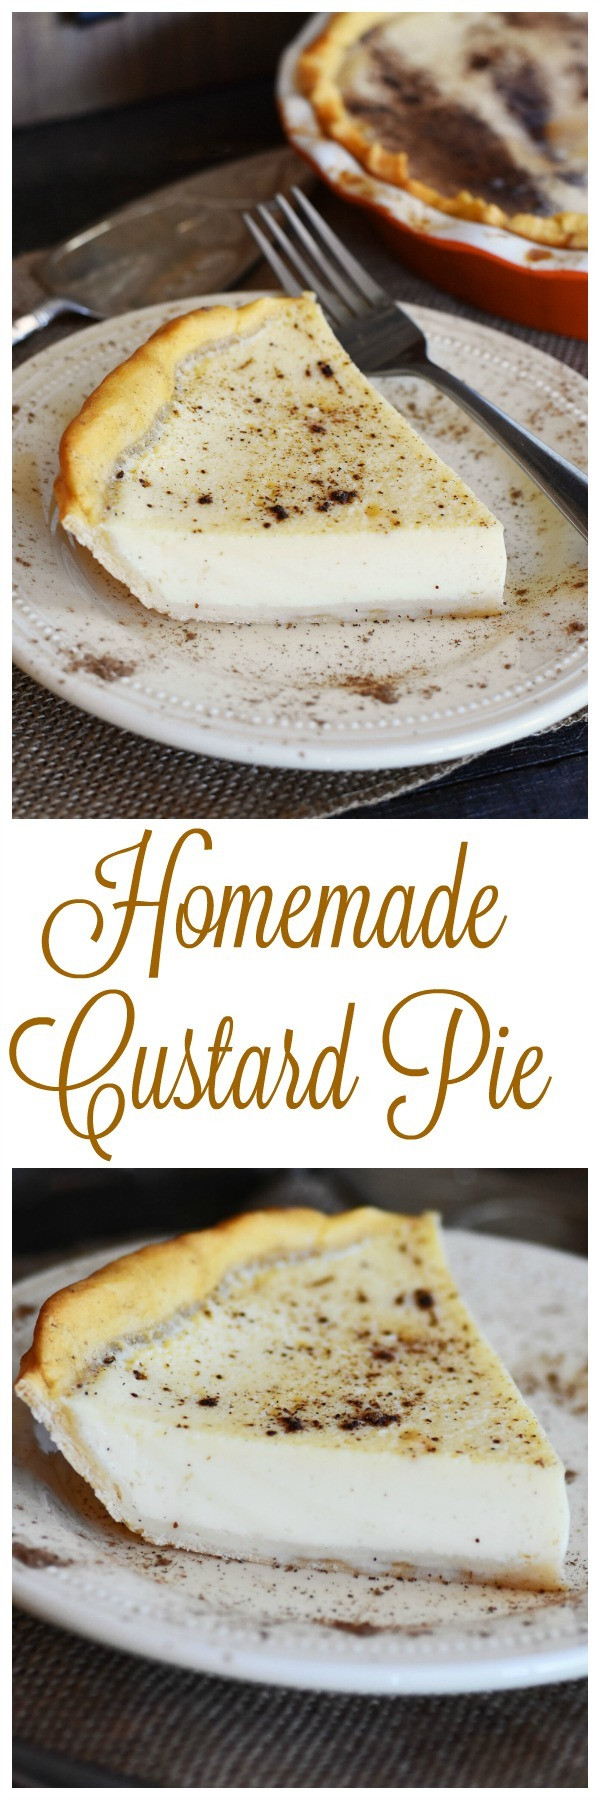 Egg Custard Pie Recipes
 Homemade Egg Custard Pie Recipe